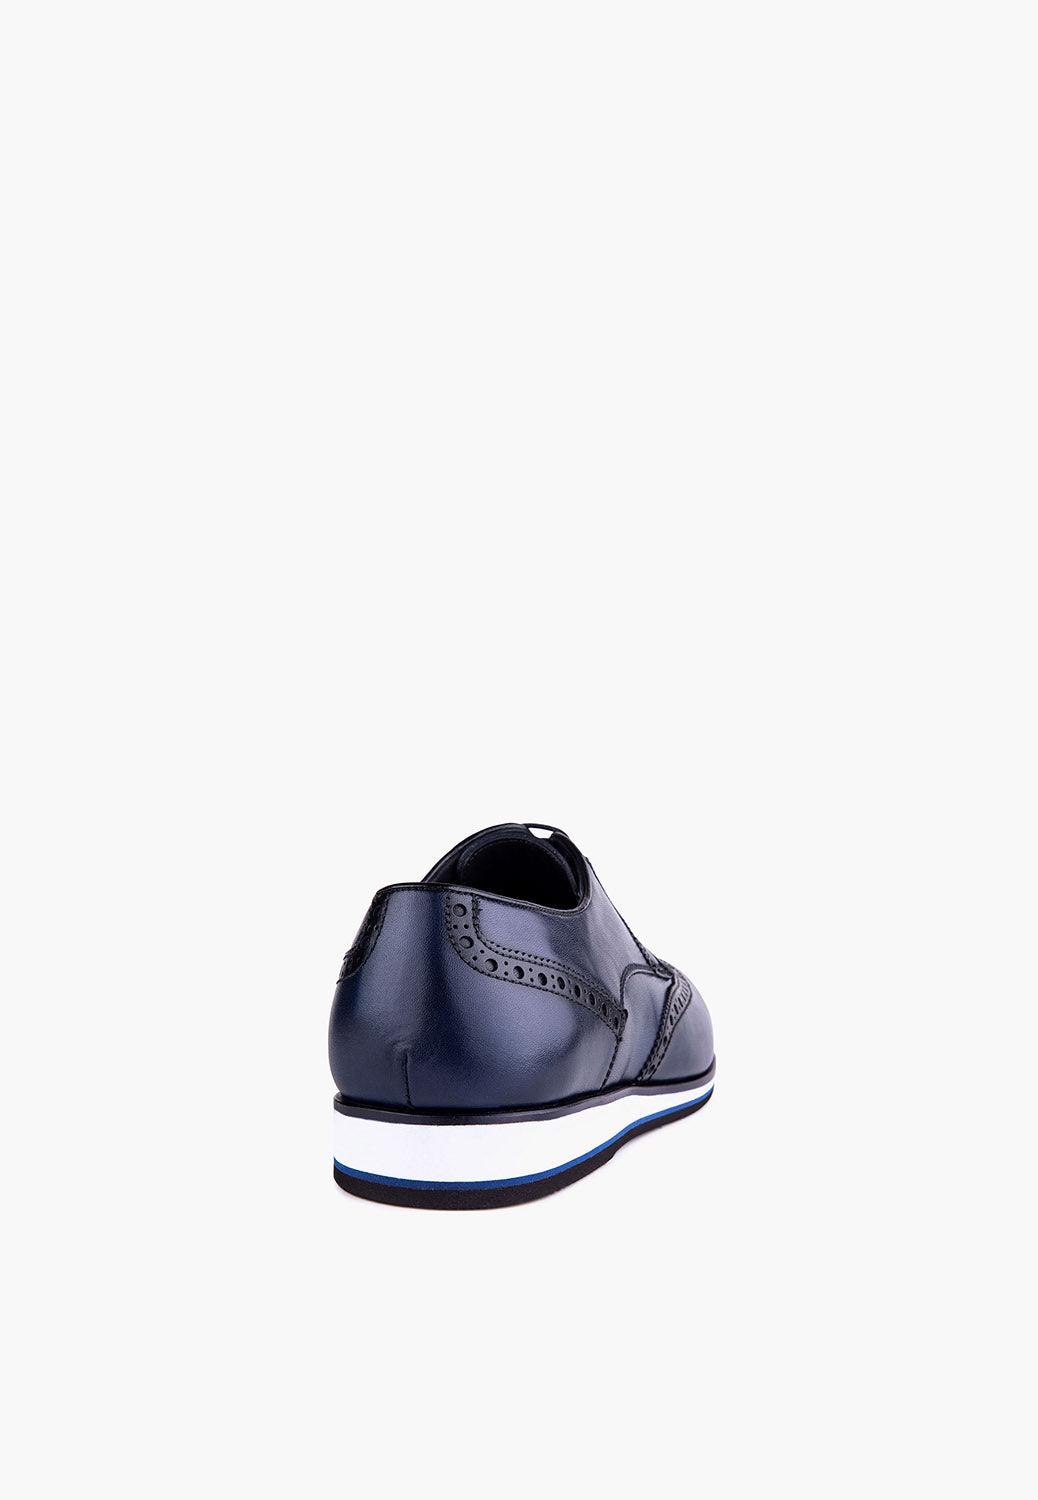 Milan Sneaker Navy - SEPOL Shoes